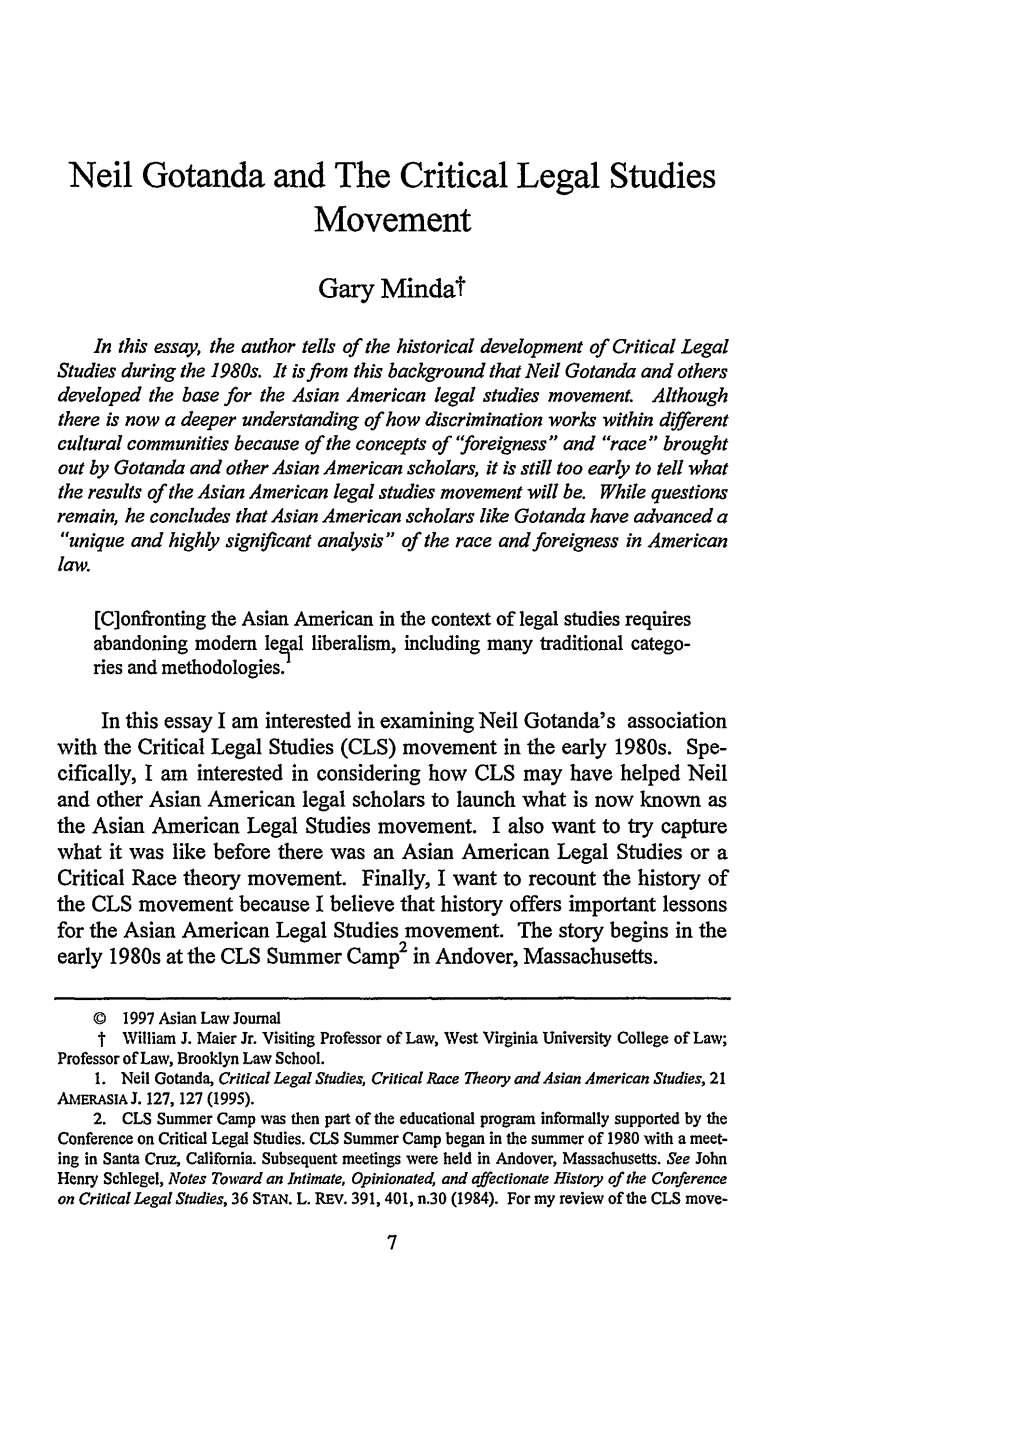 Neil Gotanda and the Critical Legal Studies Movement